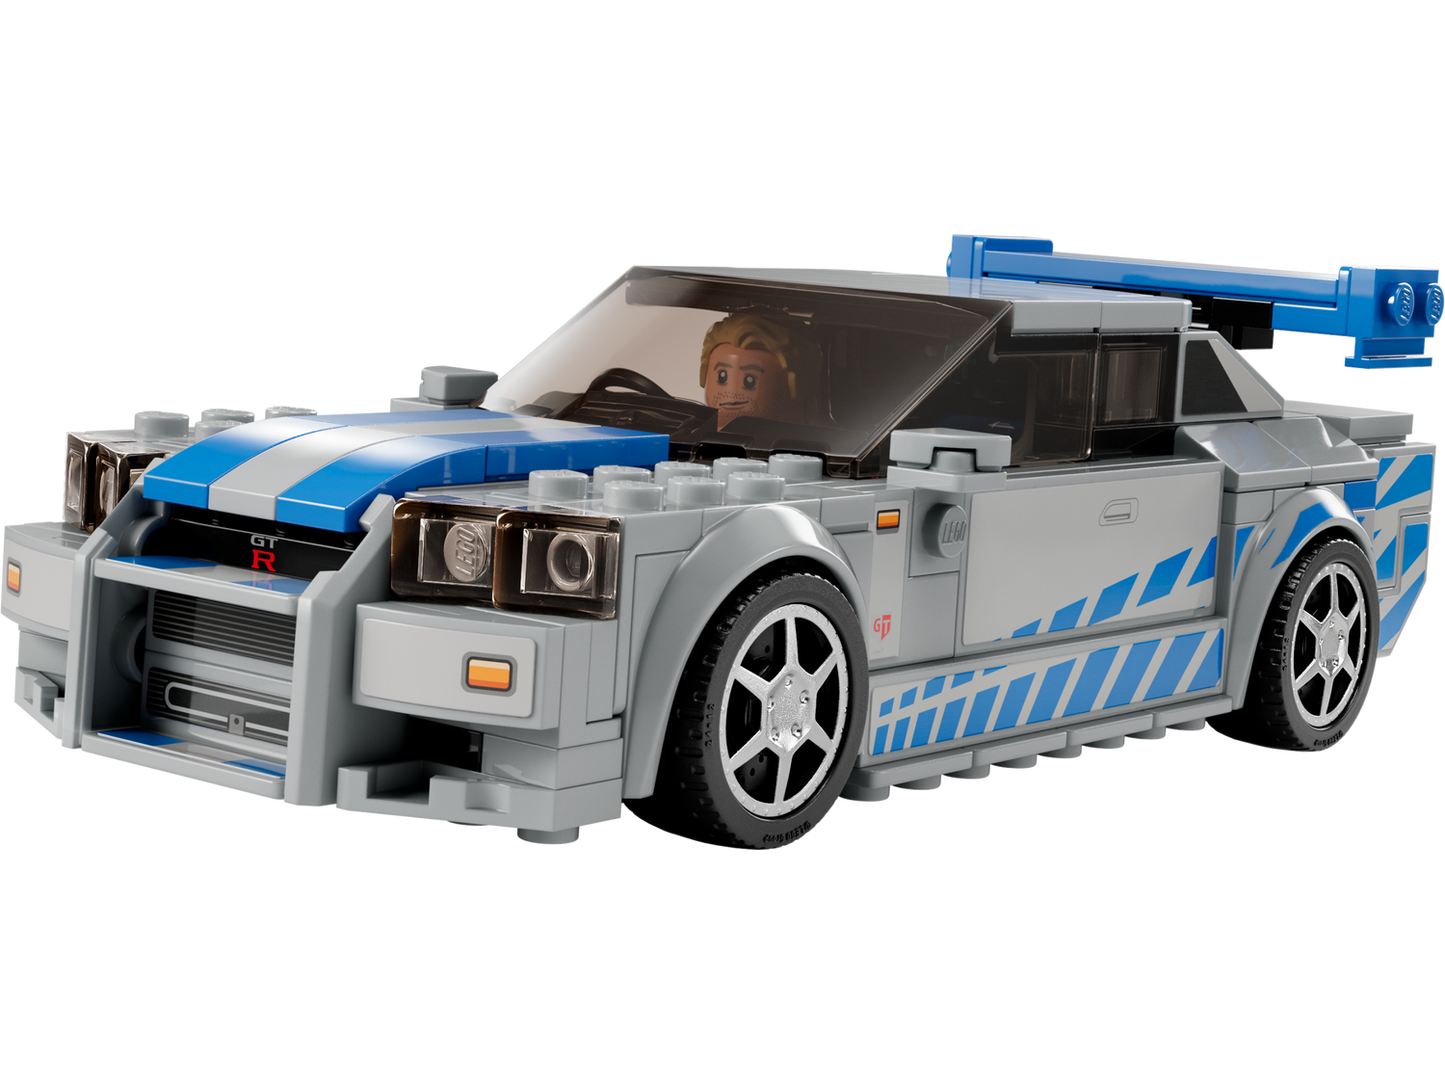 76917 LEGO Speed Champions - 2 Fast 2 Furious Nissan Skyline GT-R (R34)